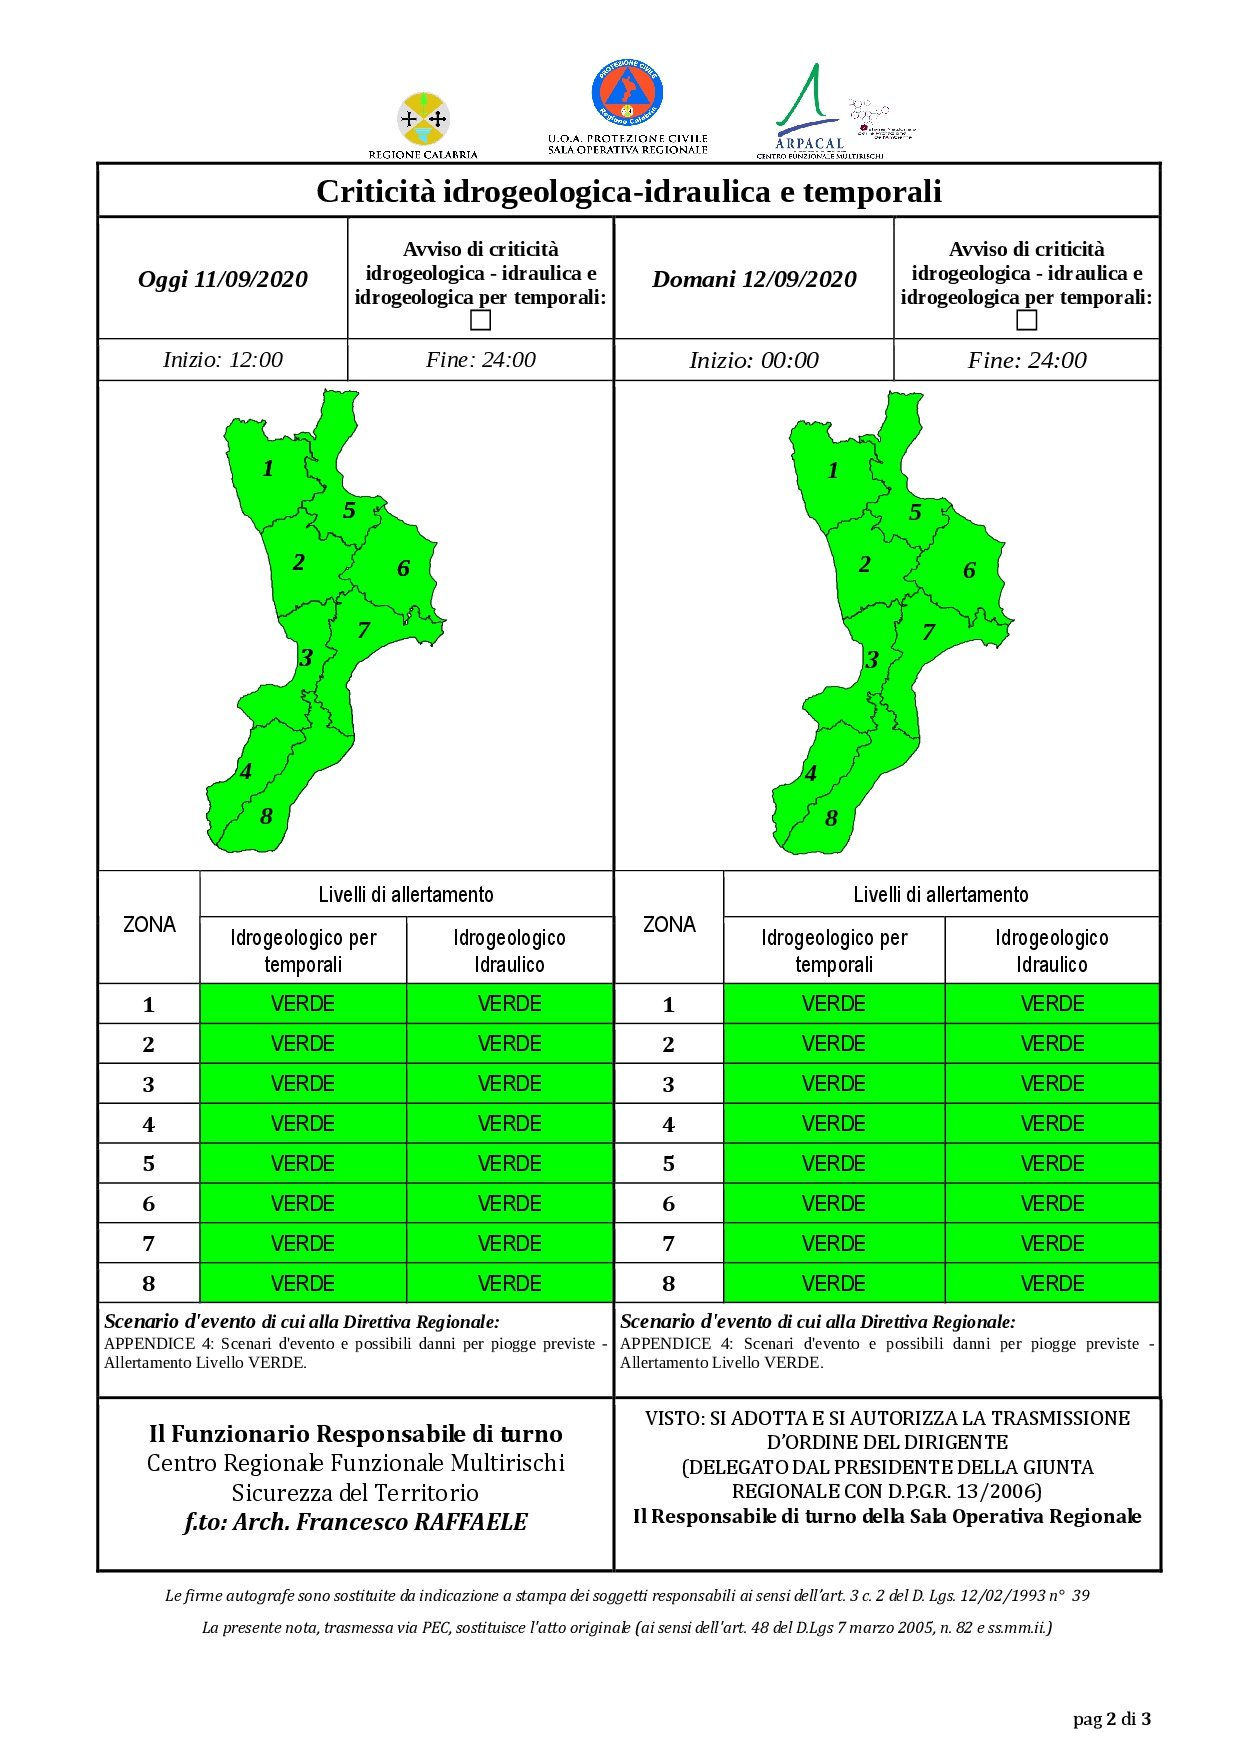 Criticità idrogeologica-idraulica e temporali in Calabria 11-09-2020